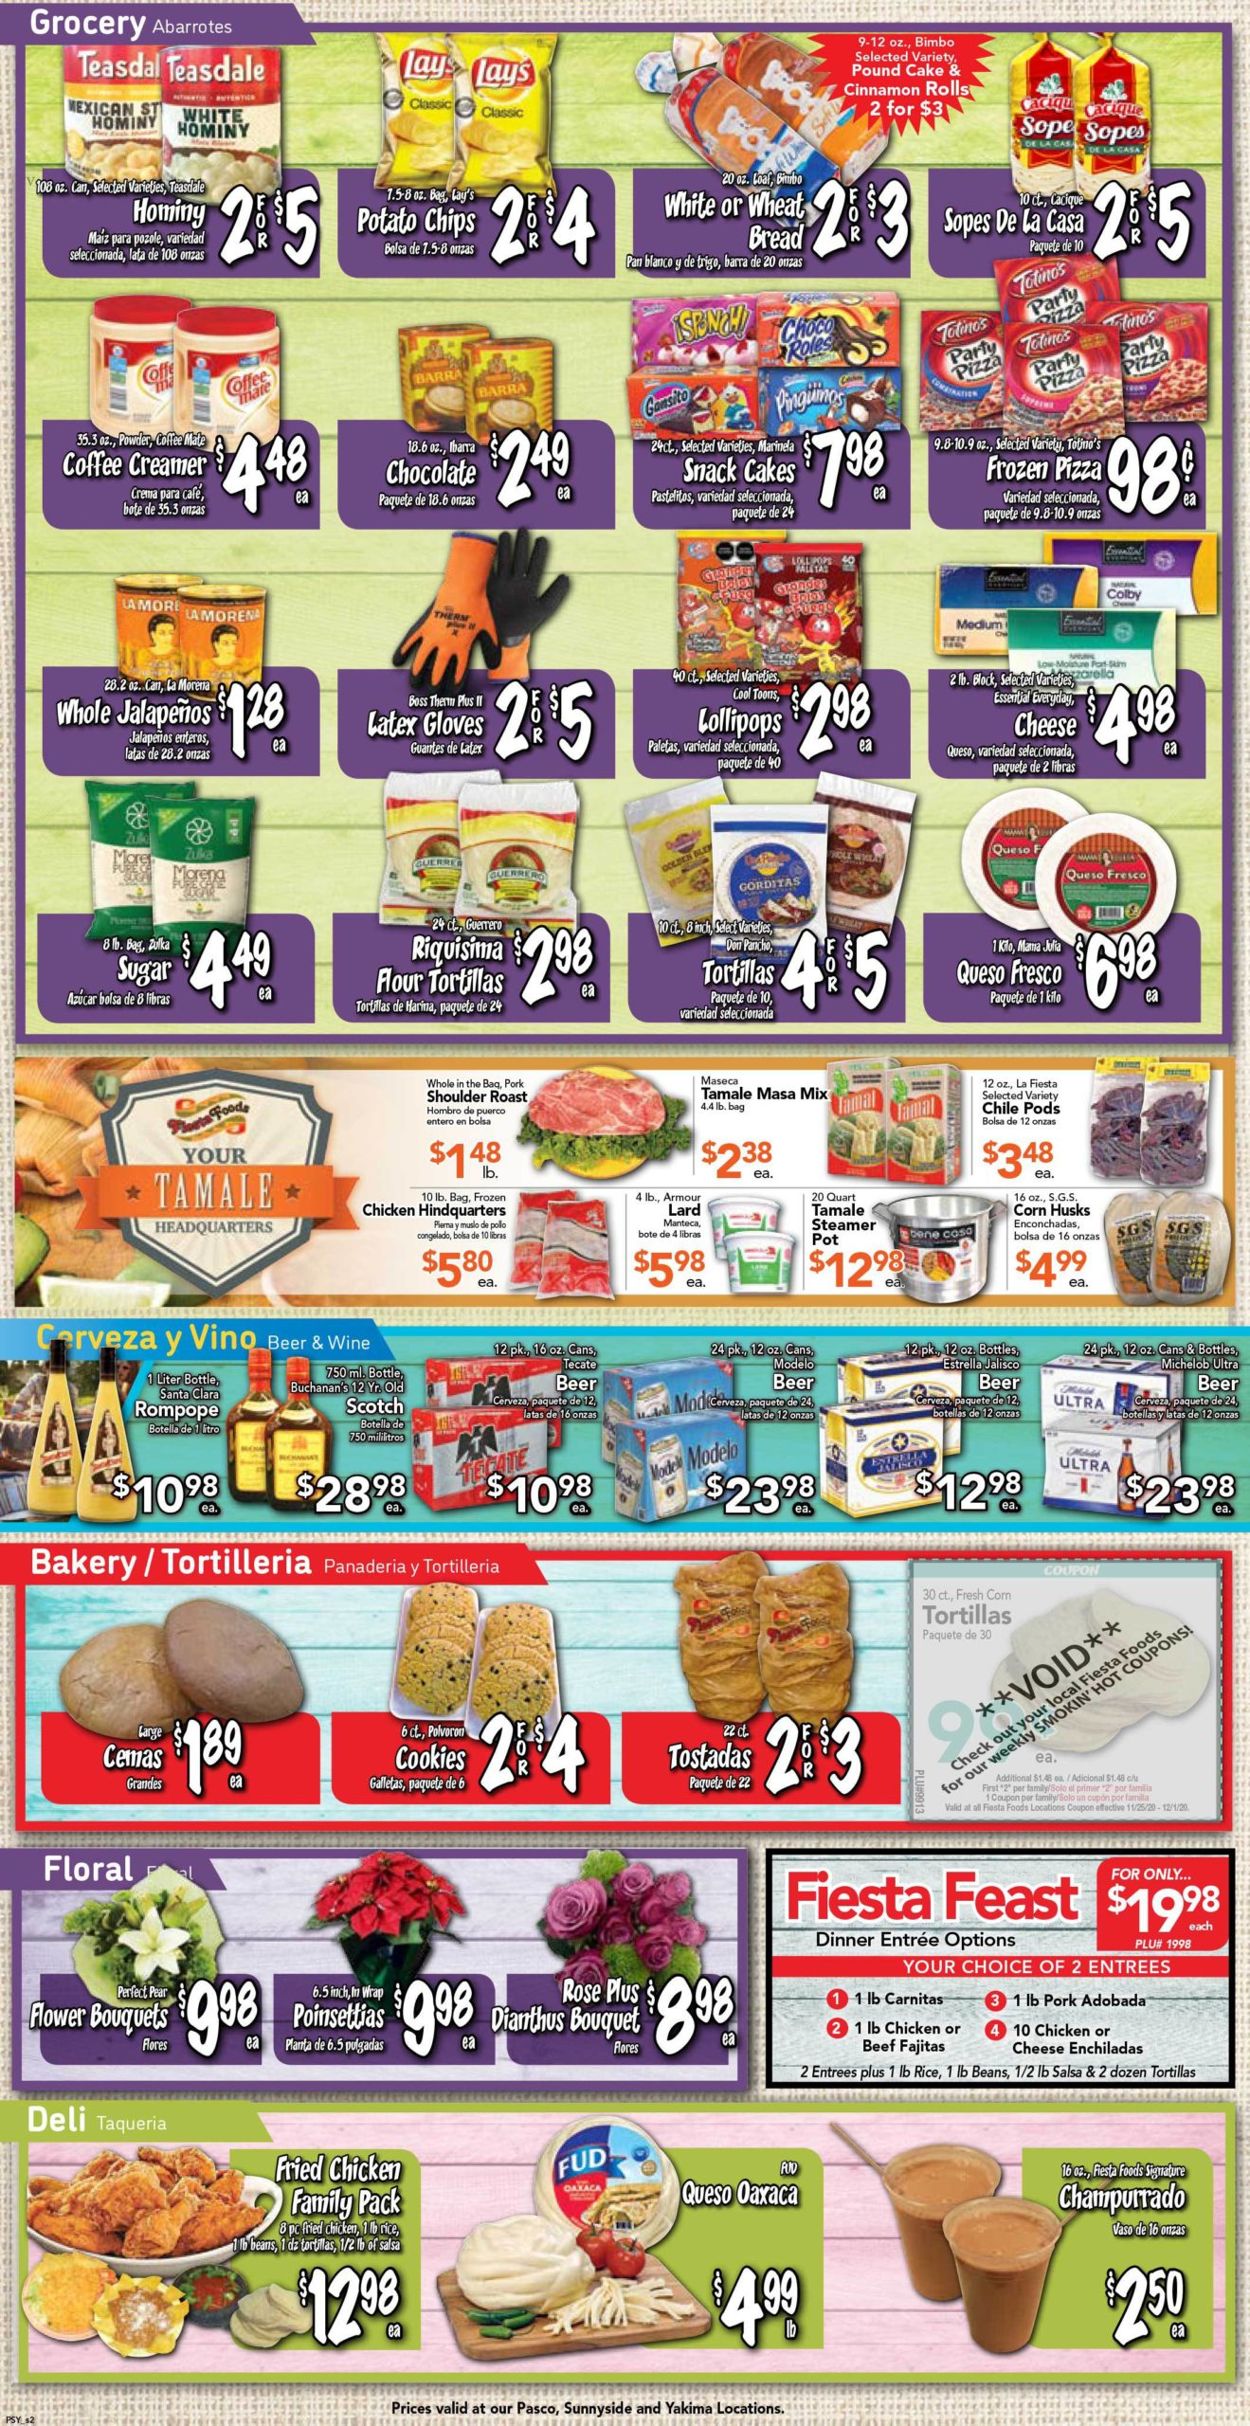 Catalogue Fiesta Foods SuperMarkets Thanksgiving 2020 from 11/25/2020